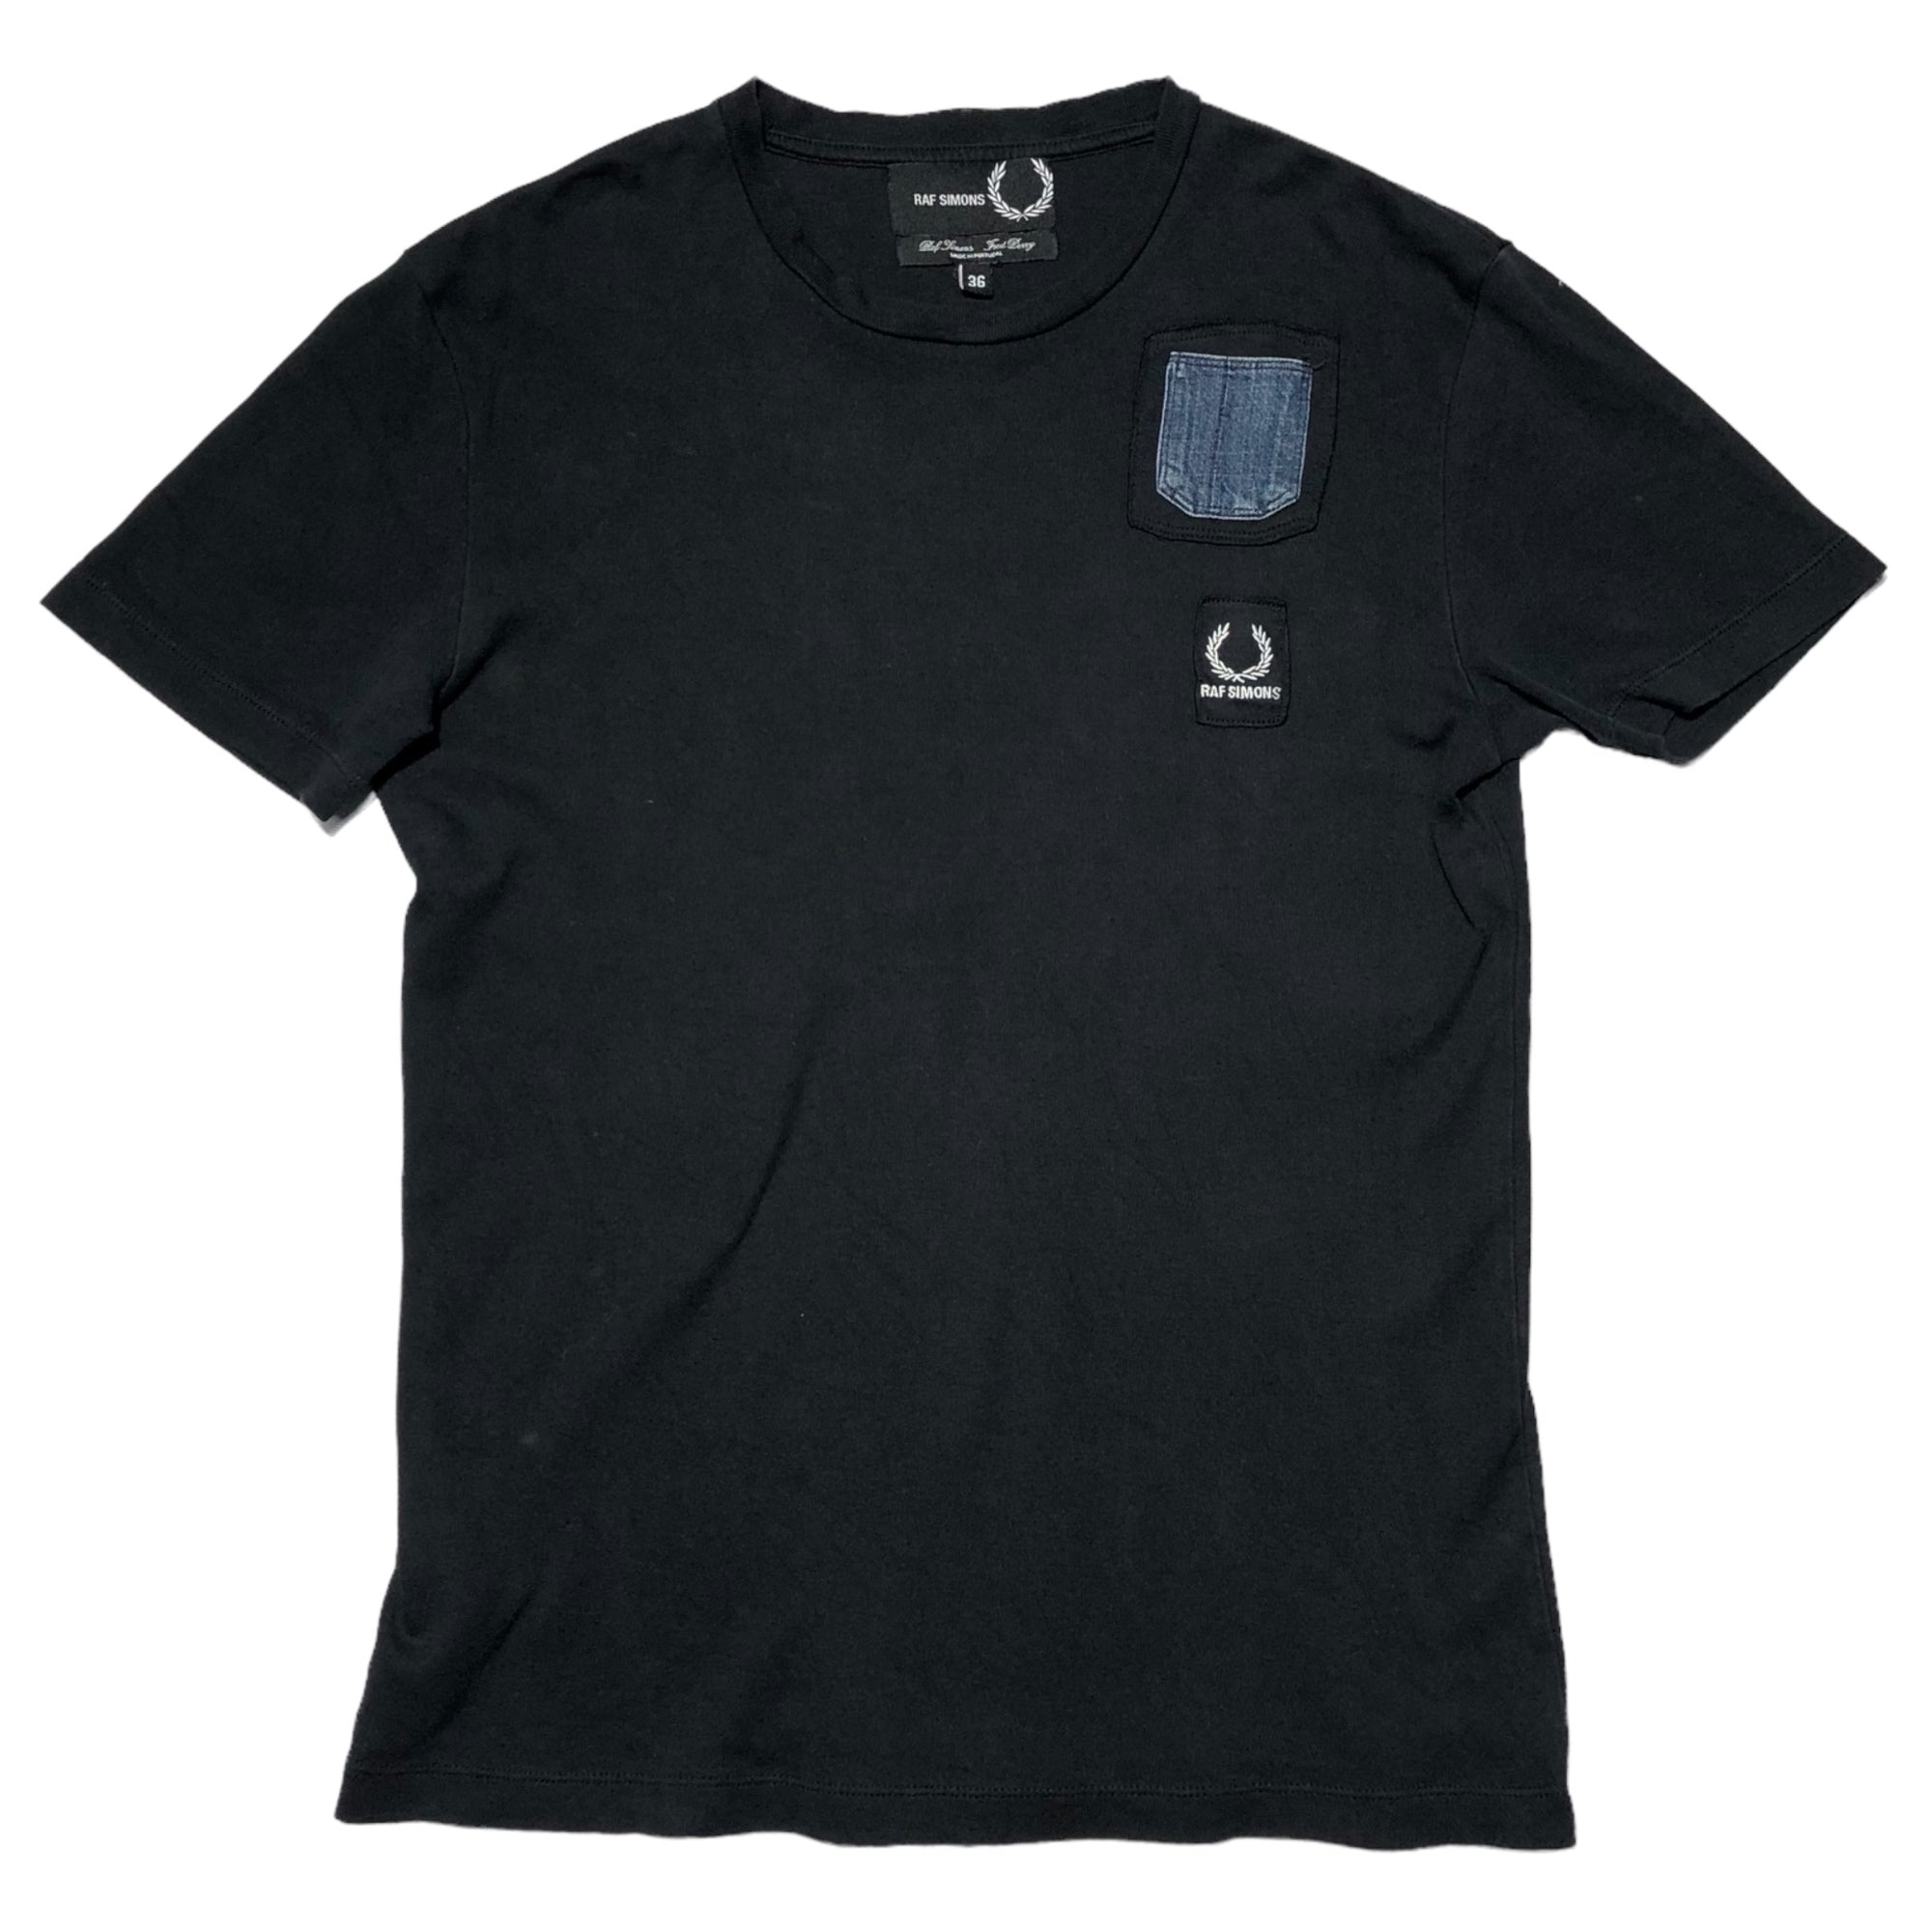 RAF SIMONS×FRED PERRY(ラフシモンズ×フレッドペリー) Denim pocket logo patch T-shirt デニム ポケット ロゴ ワッペン 半袖 Tシャツ SM1418 36(S程度) ブラック